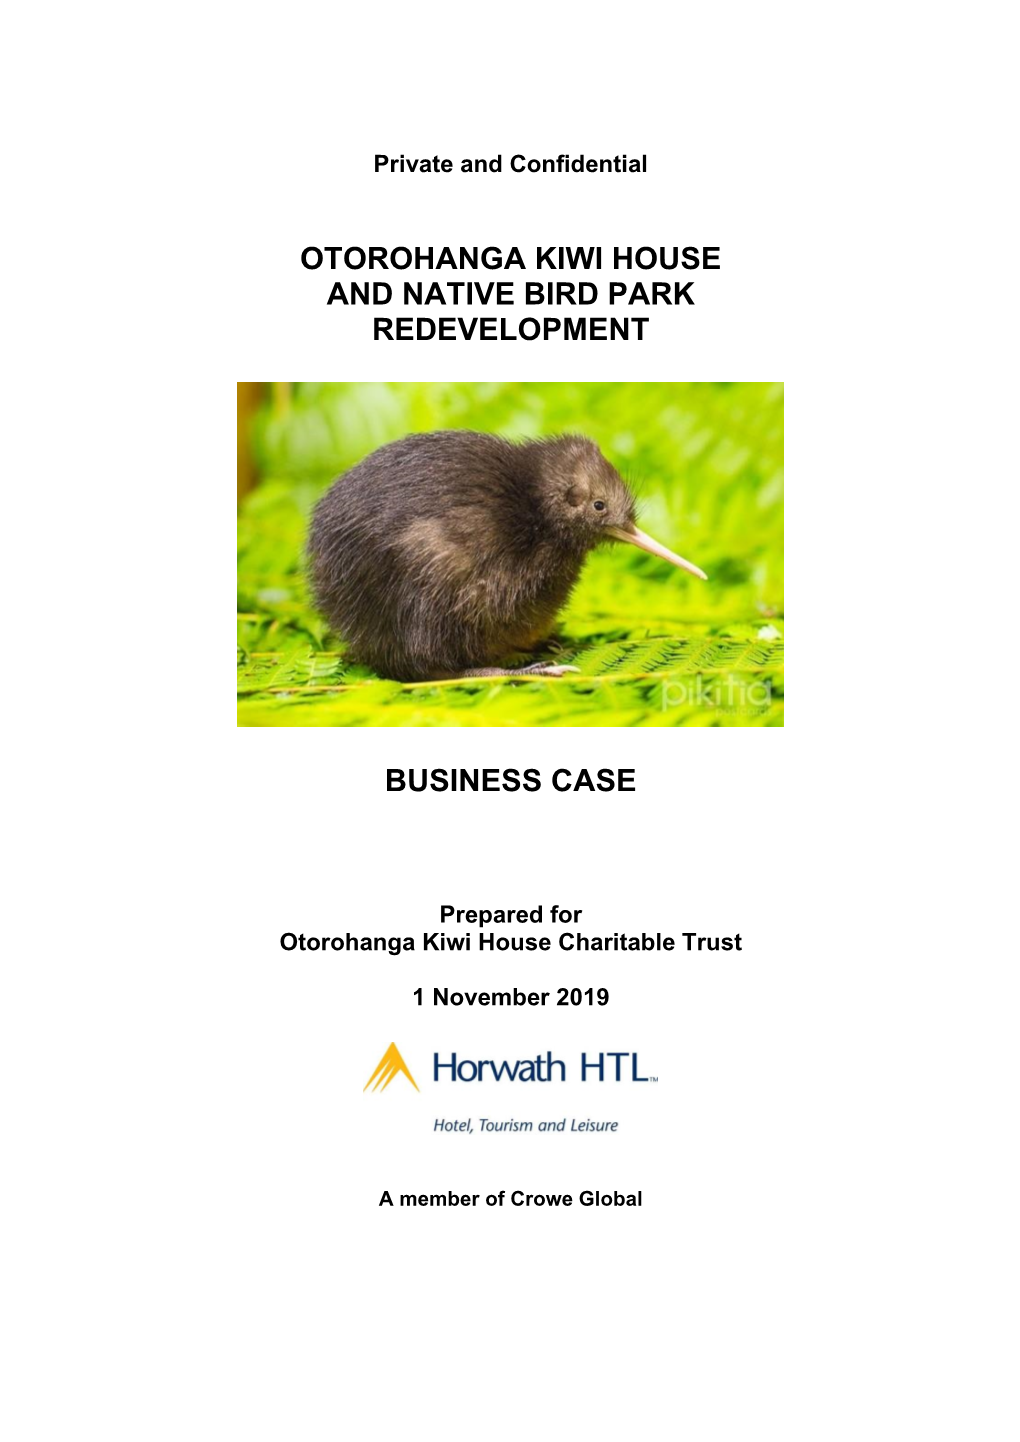 Otorohanga Kiwi House and Native Bird Park Redevelopment